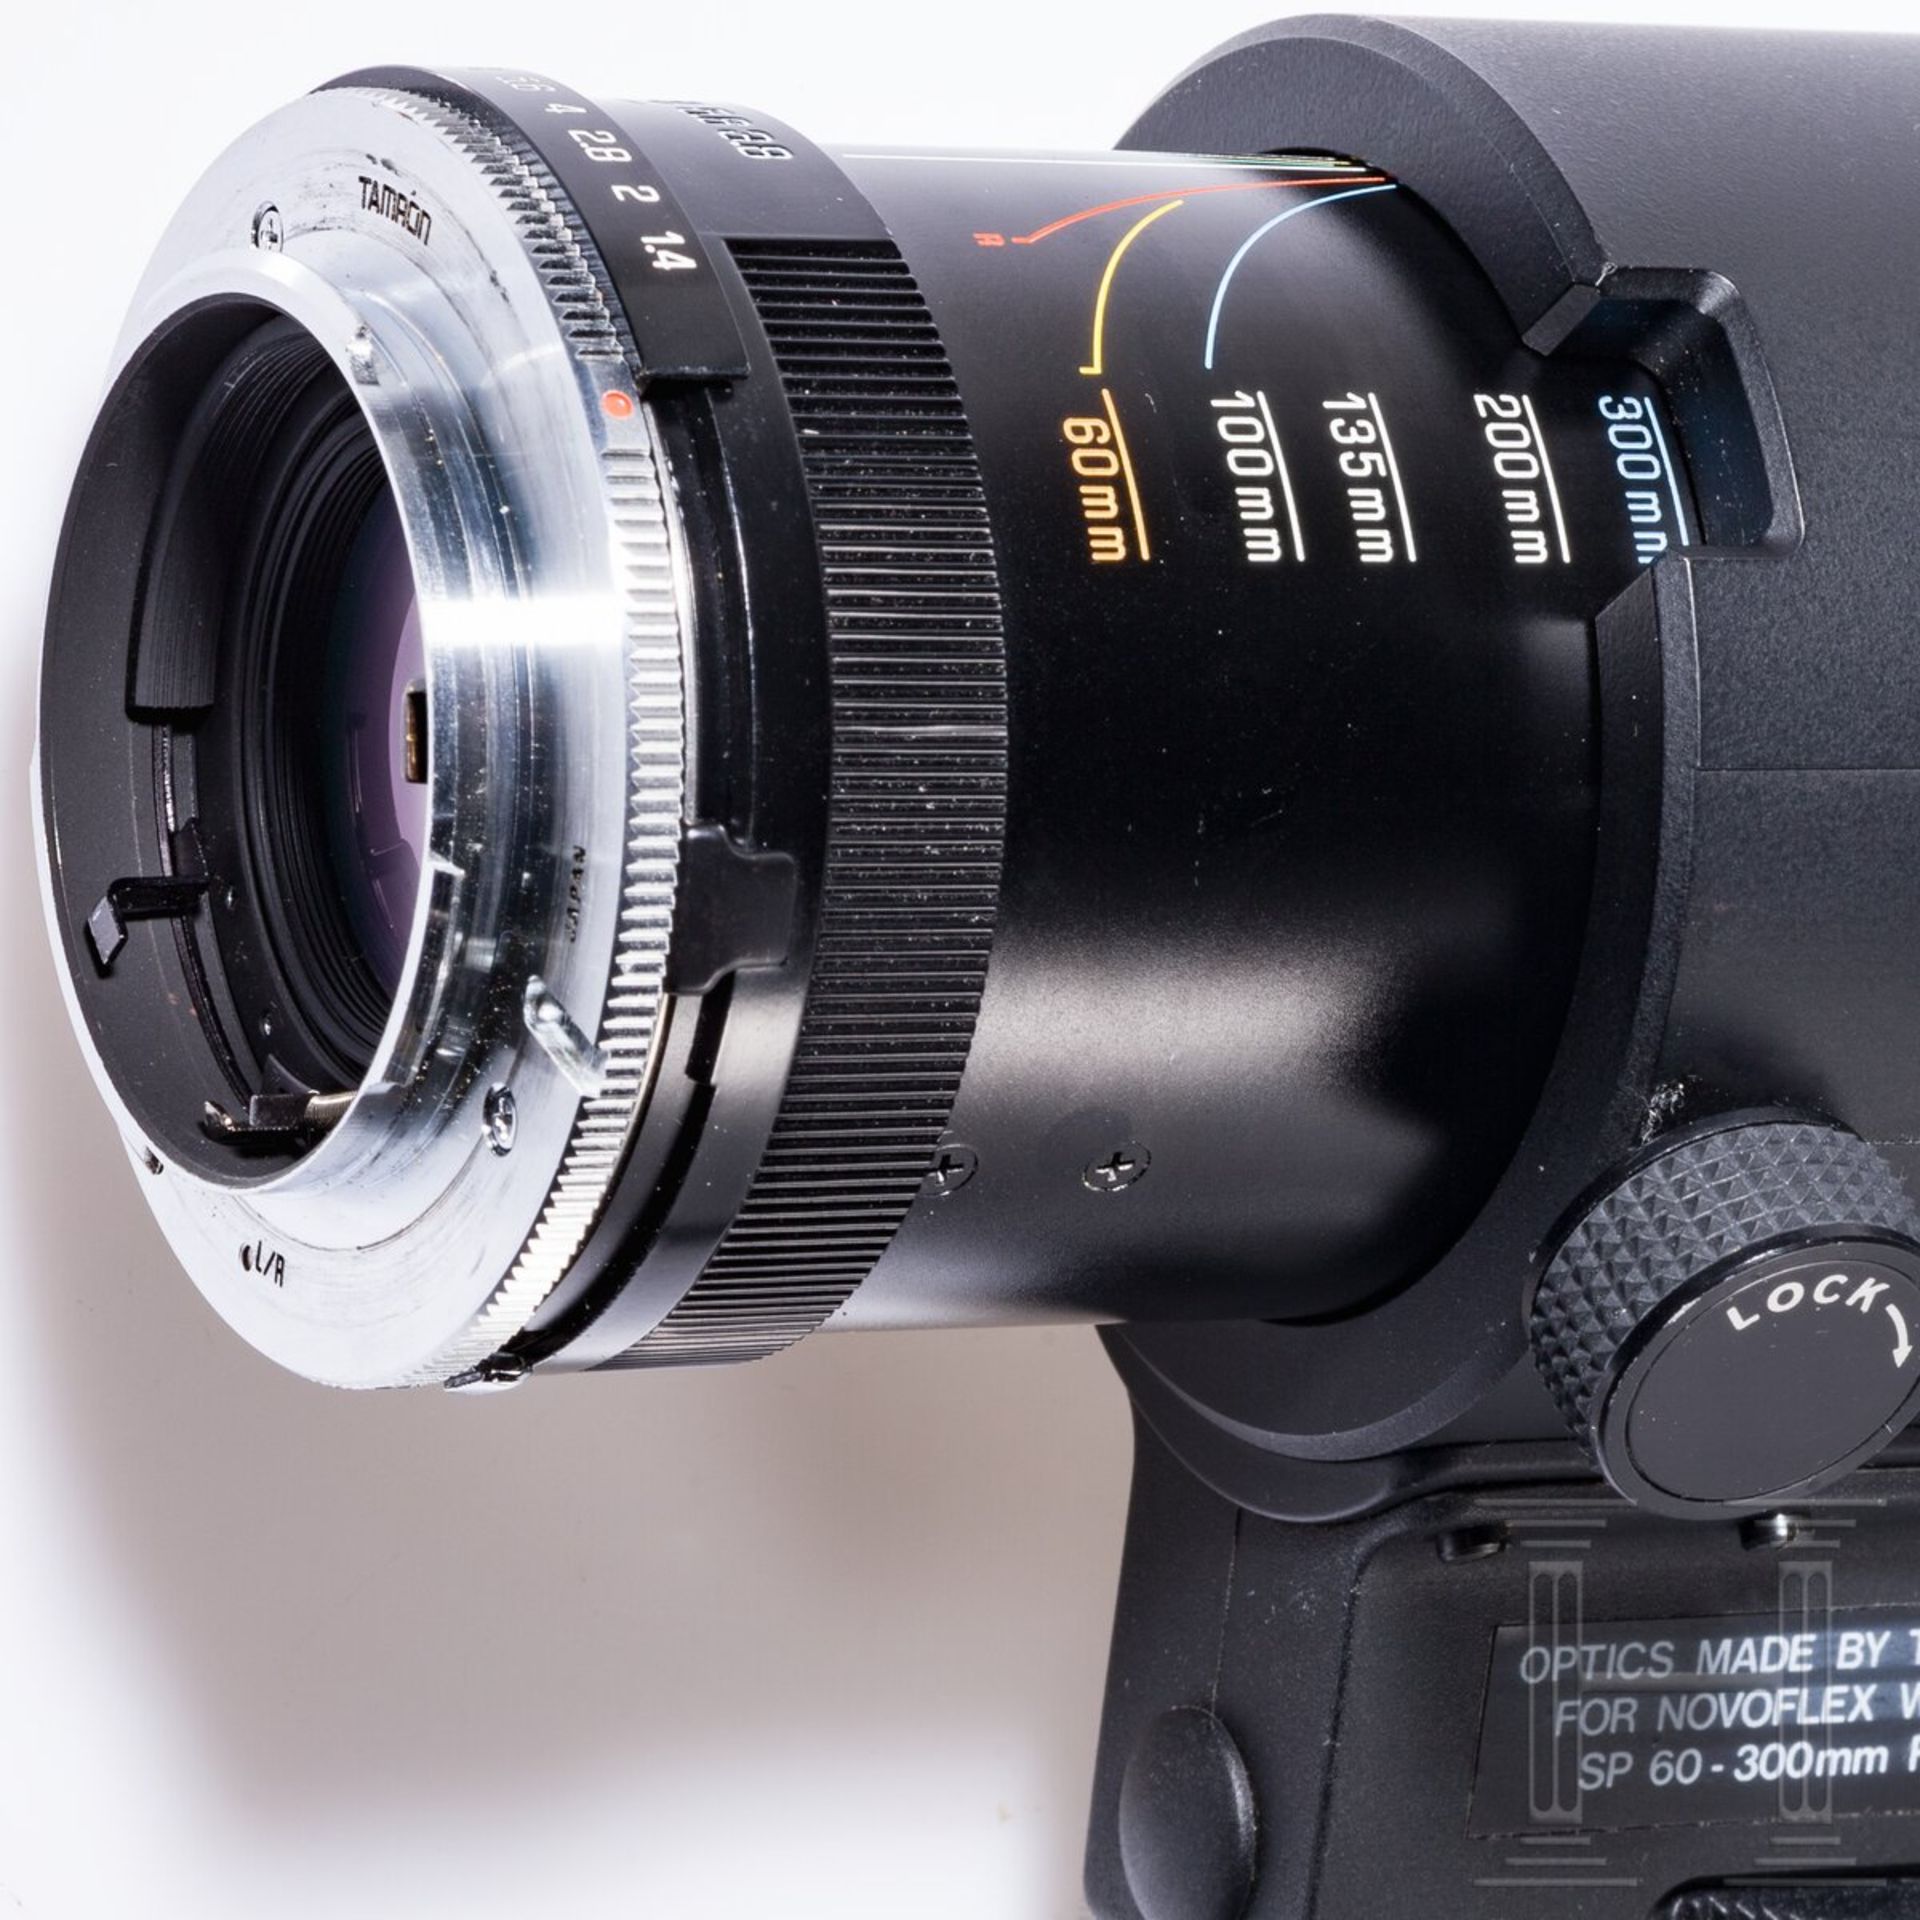 Novoflex-Schnellschuss-Objektiv 3,8 - 5,5/60-300 mm "Follow Focus Lenses" - Image 4 of 6